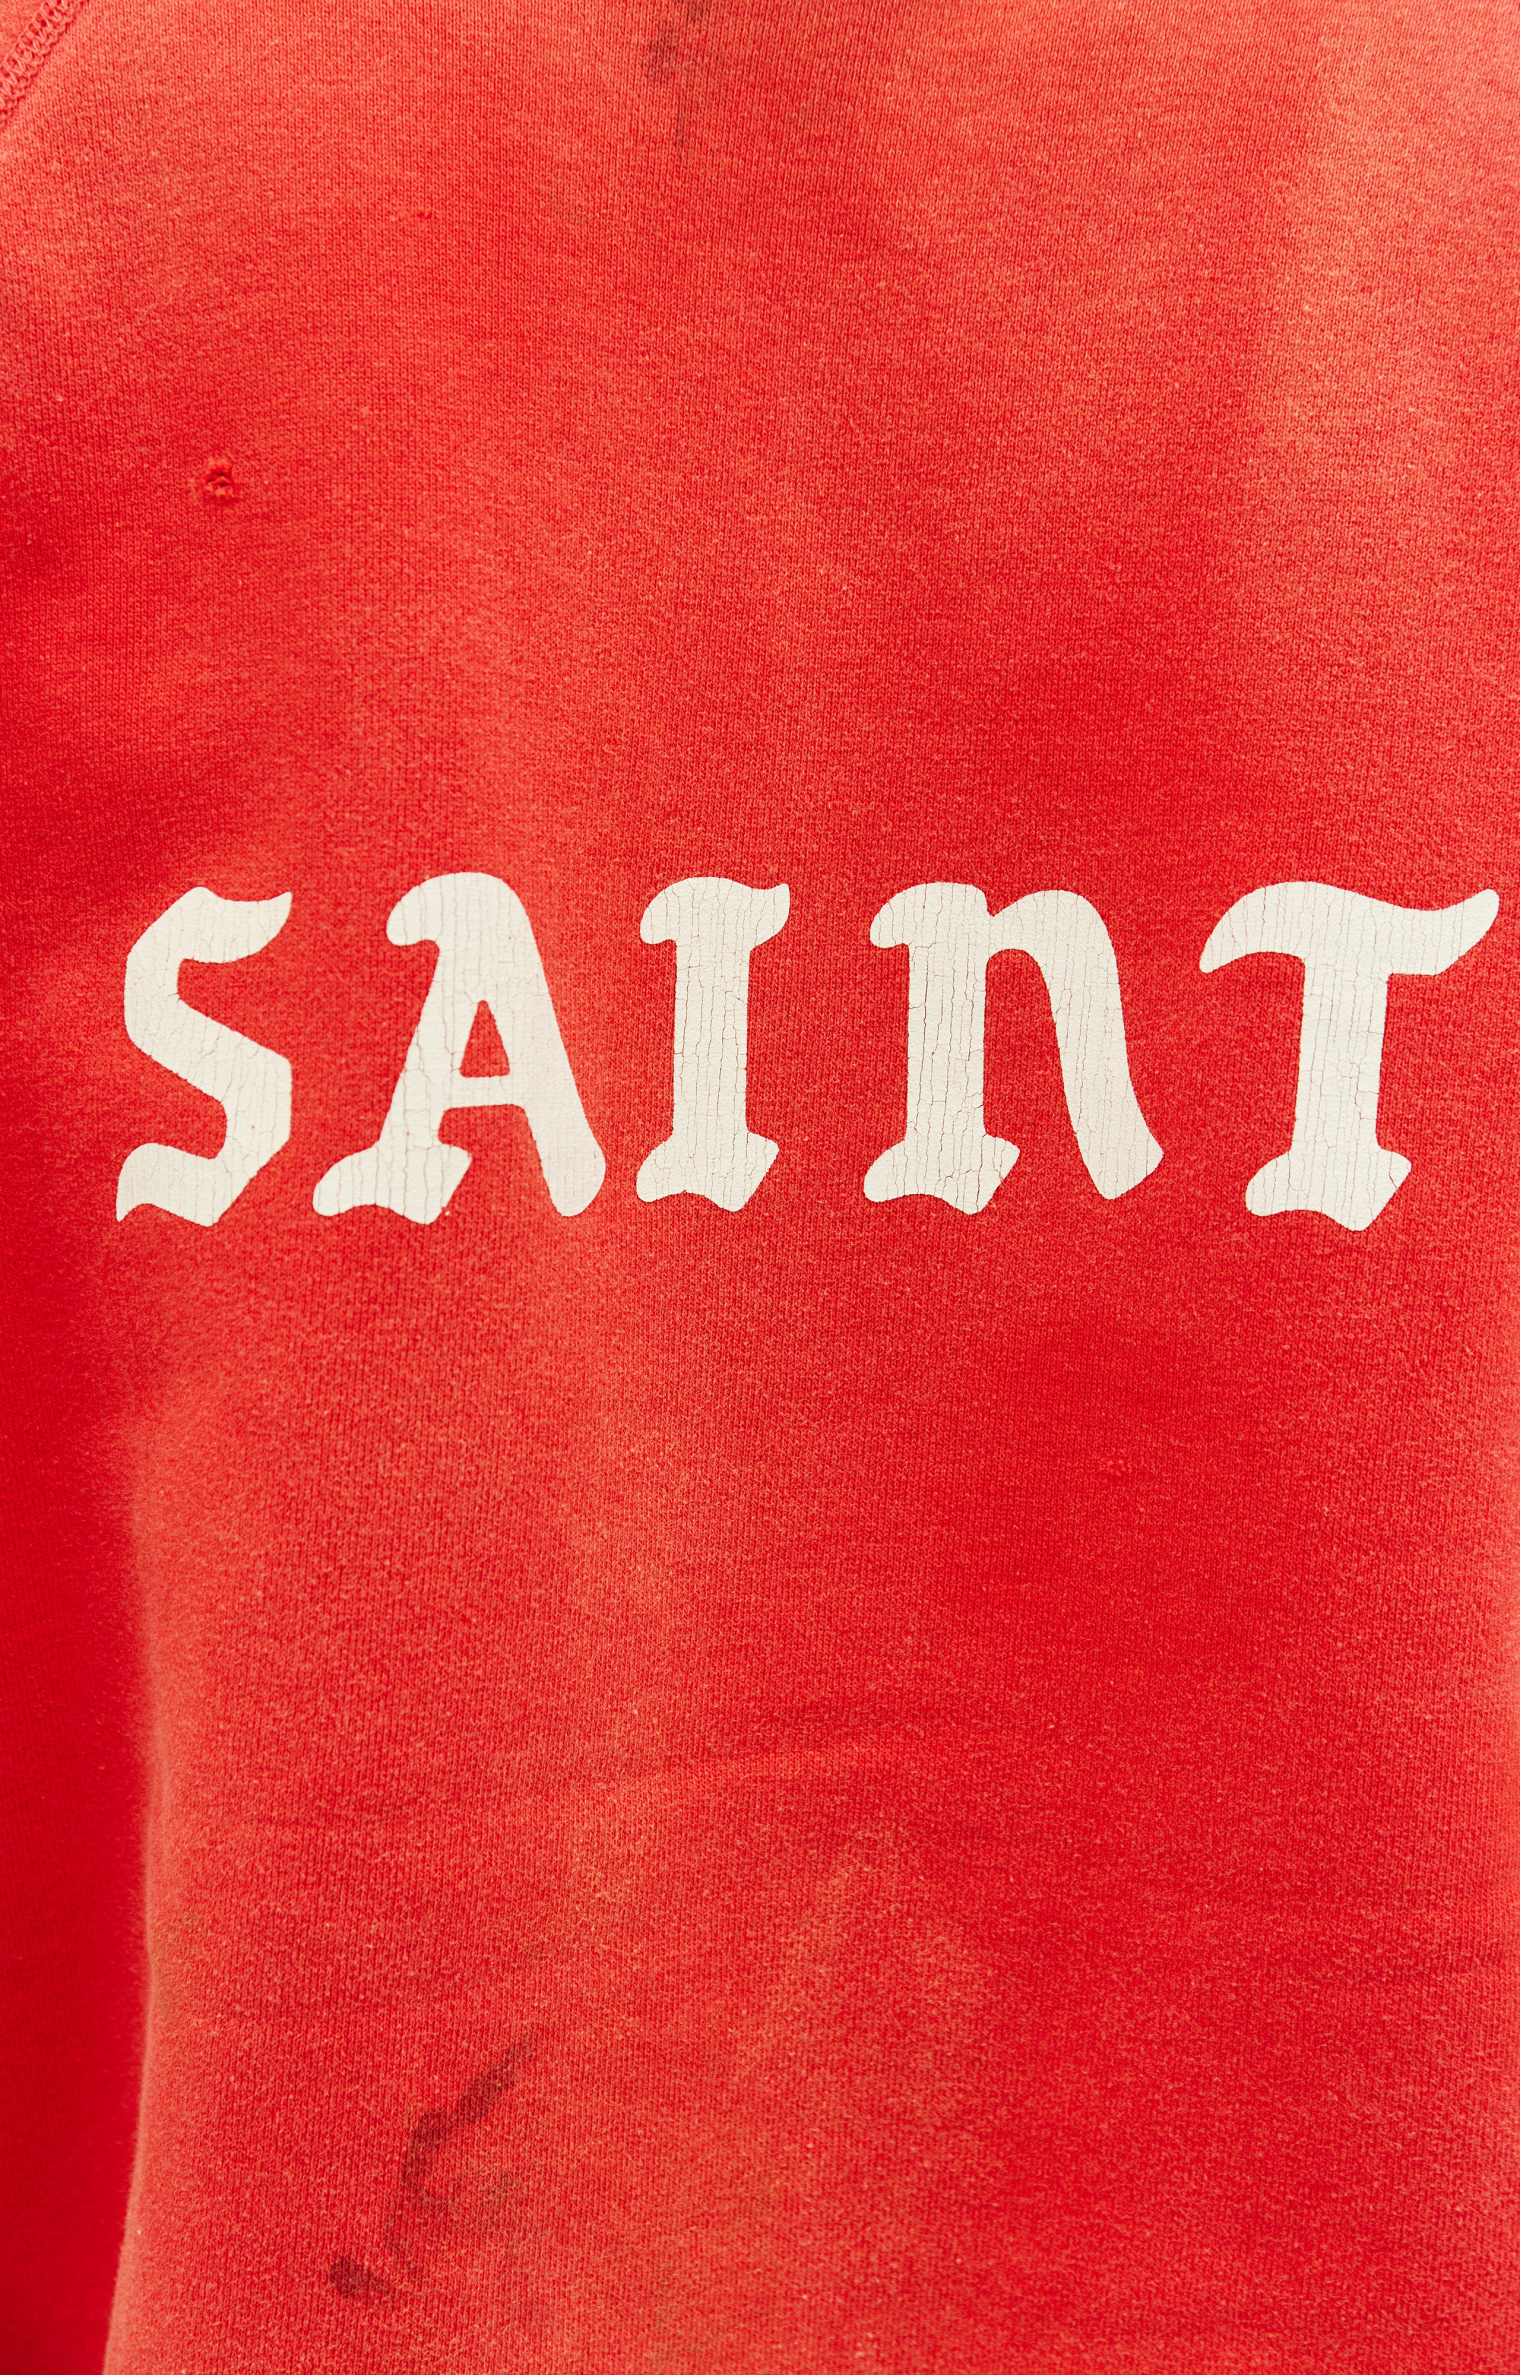 Saint Michael Printed oversize sweatshirt